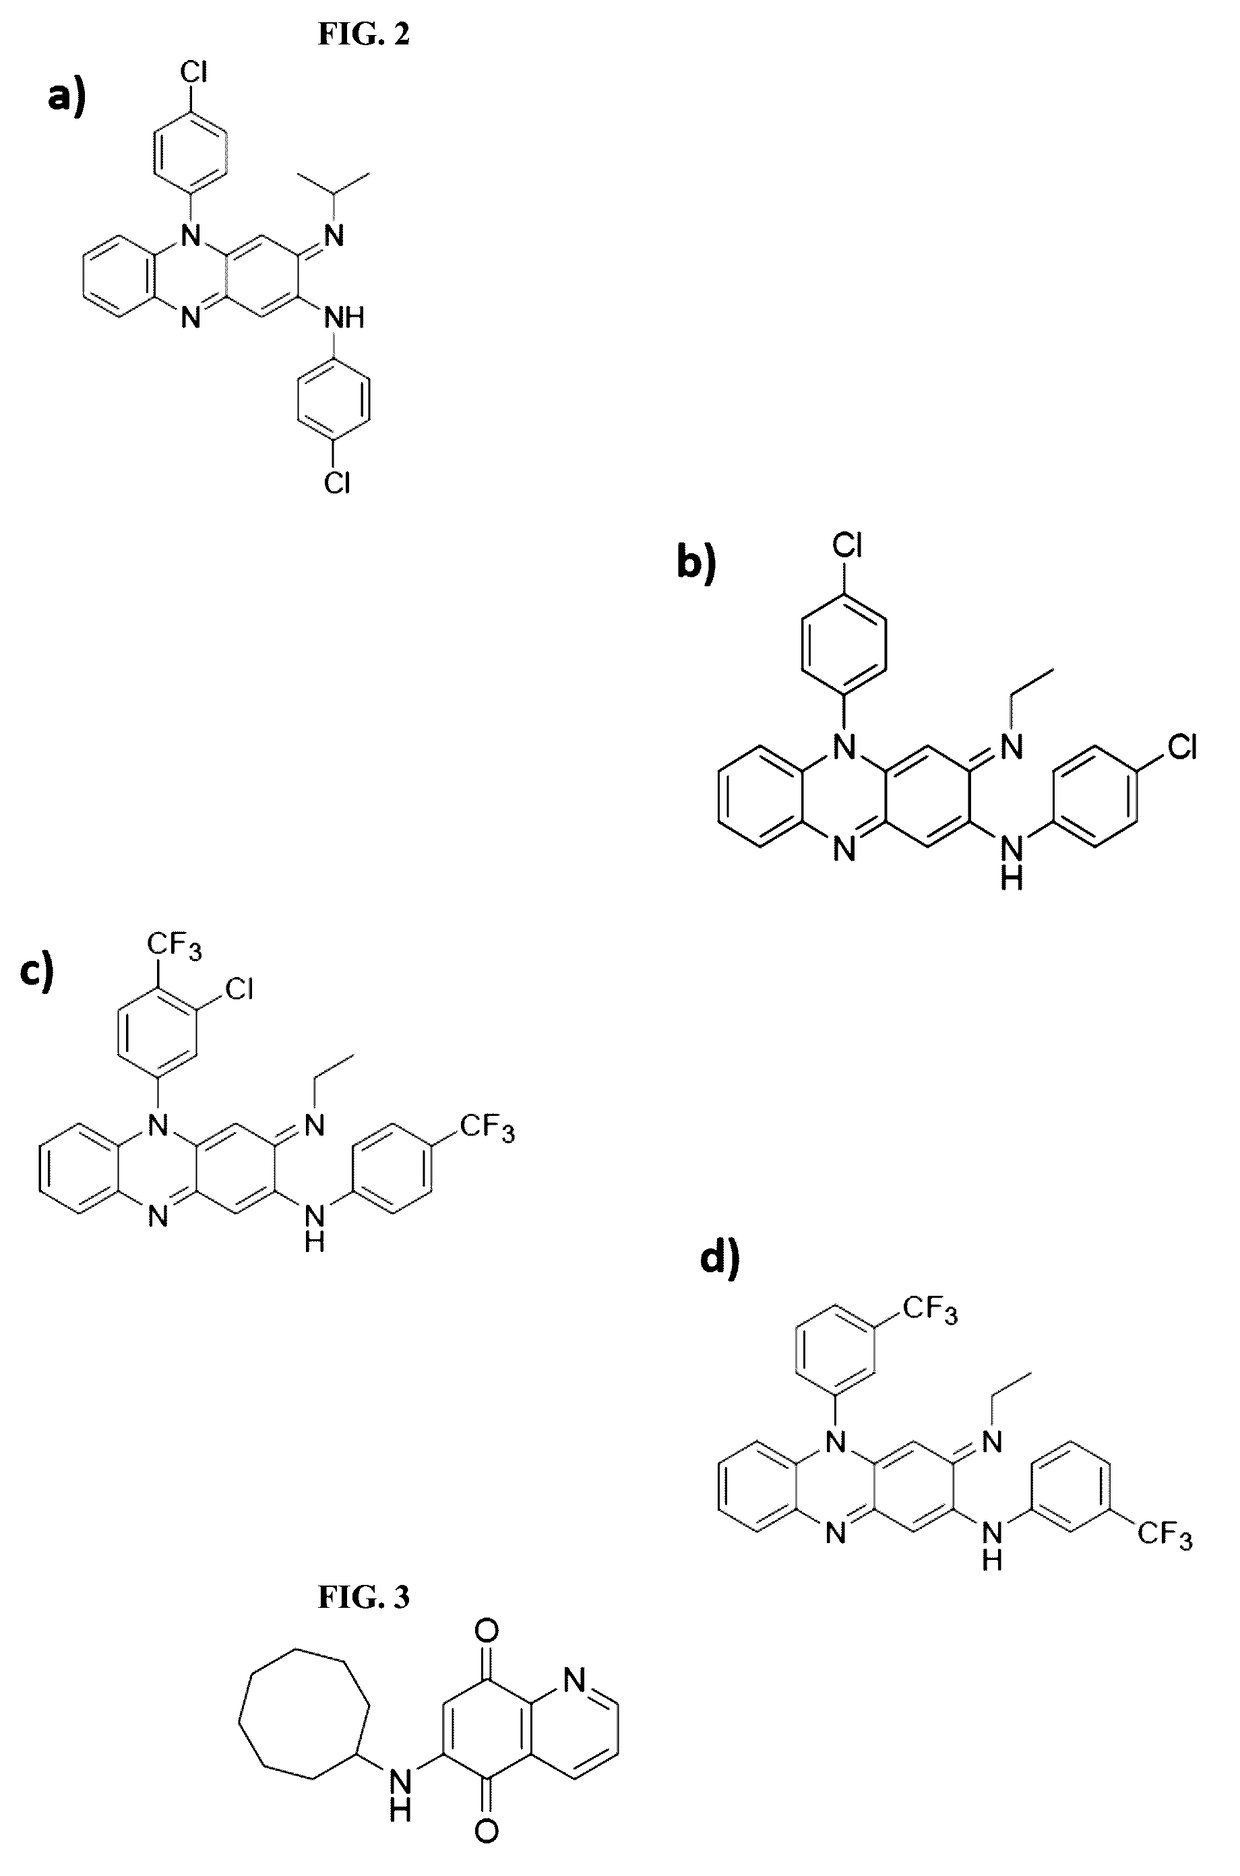 Synergistic clofazimine/metronidazole combination for treating clostridium difficile